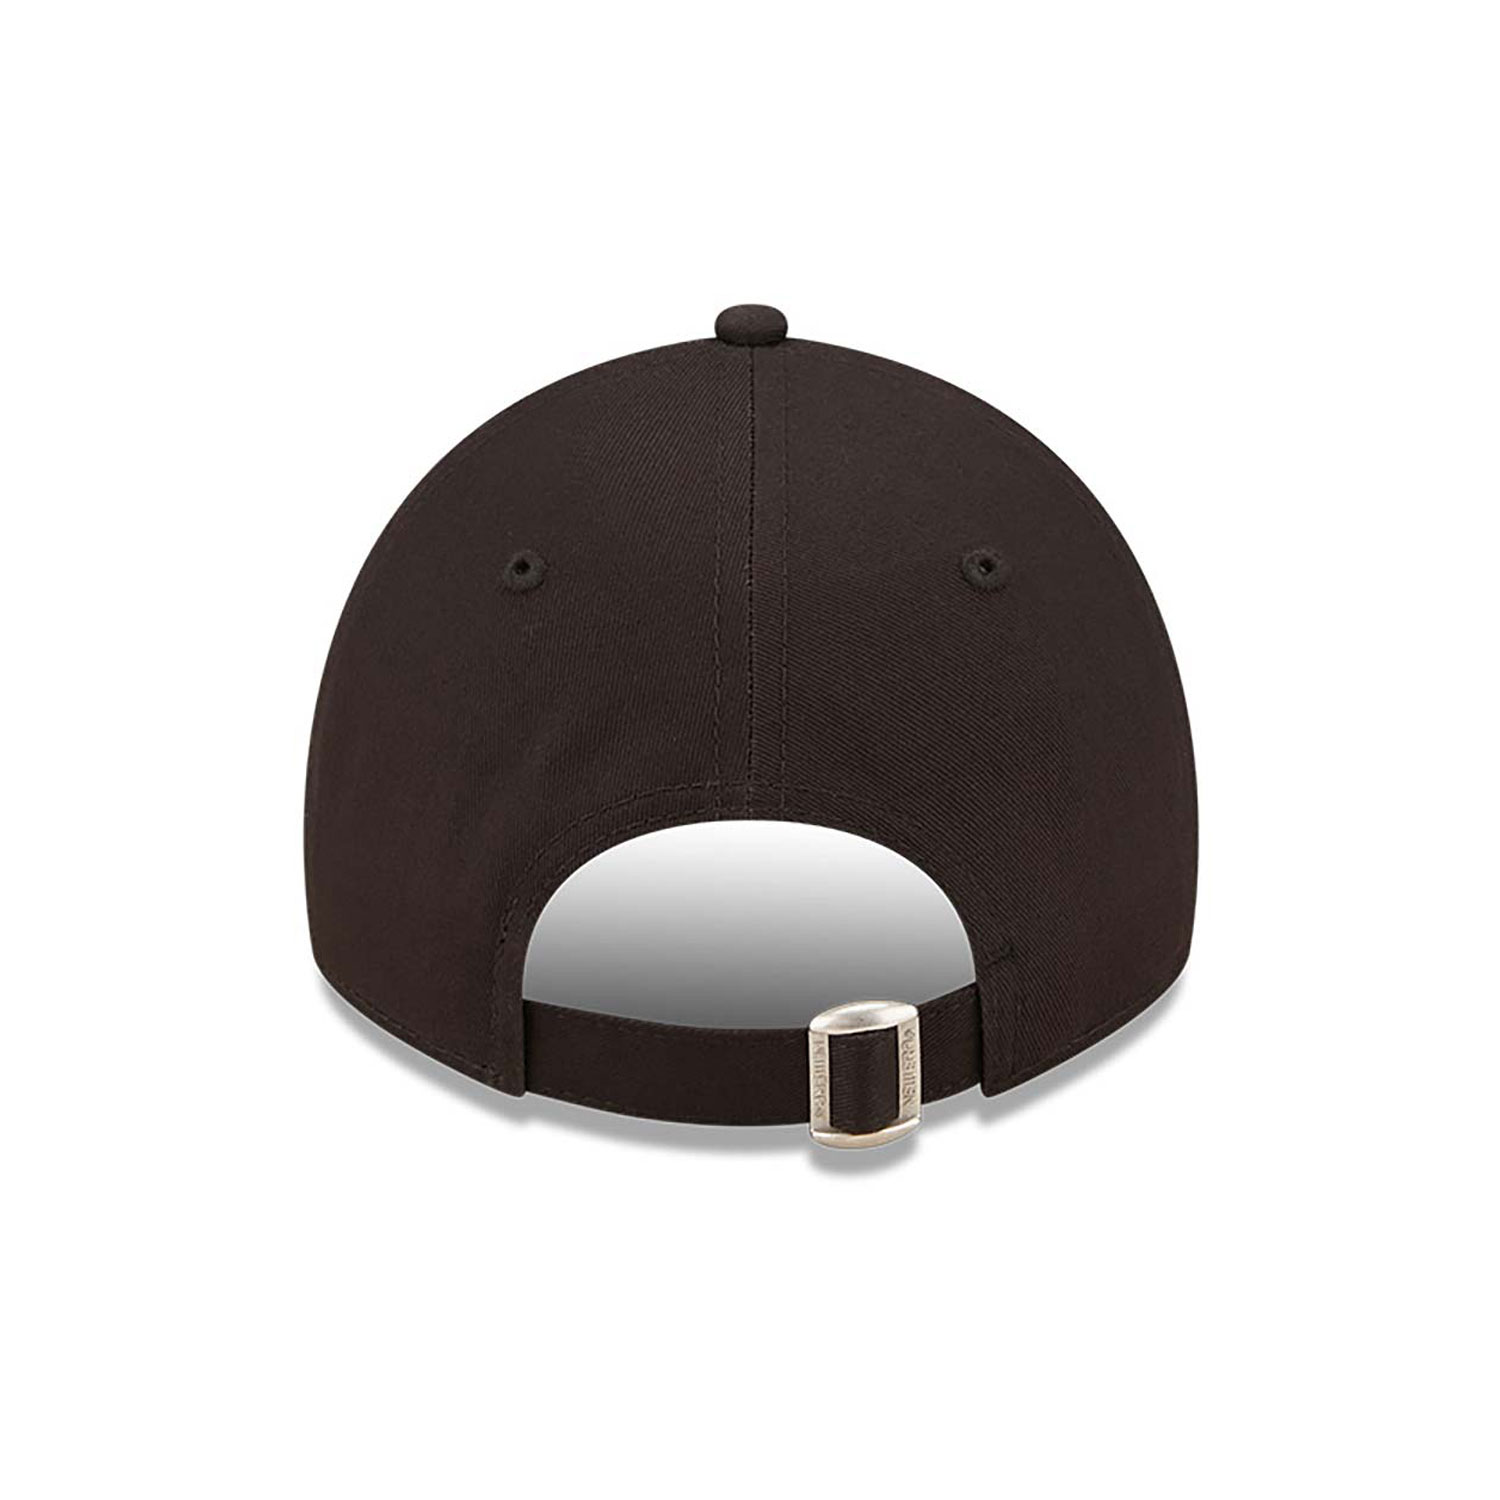 Chicago White Sox League Essential Black 9TWENTY Adjustable Cap